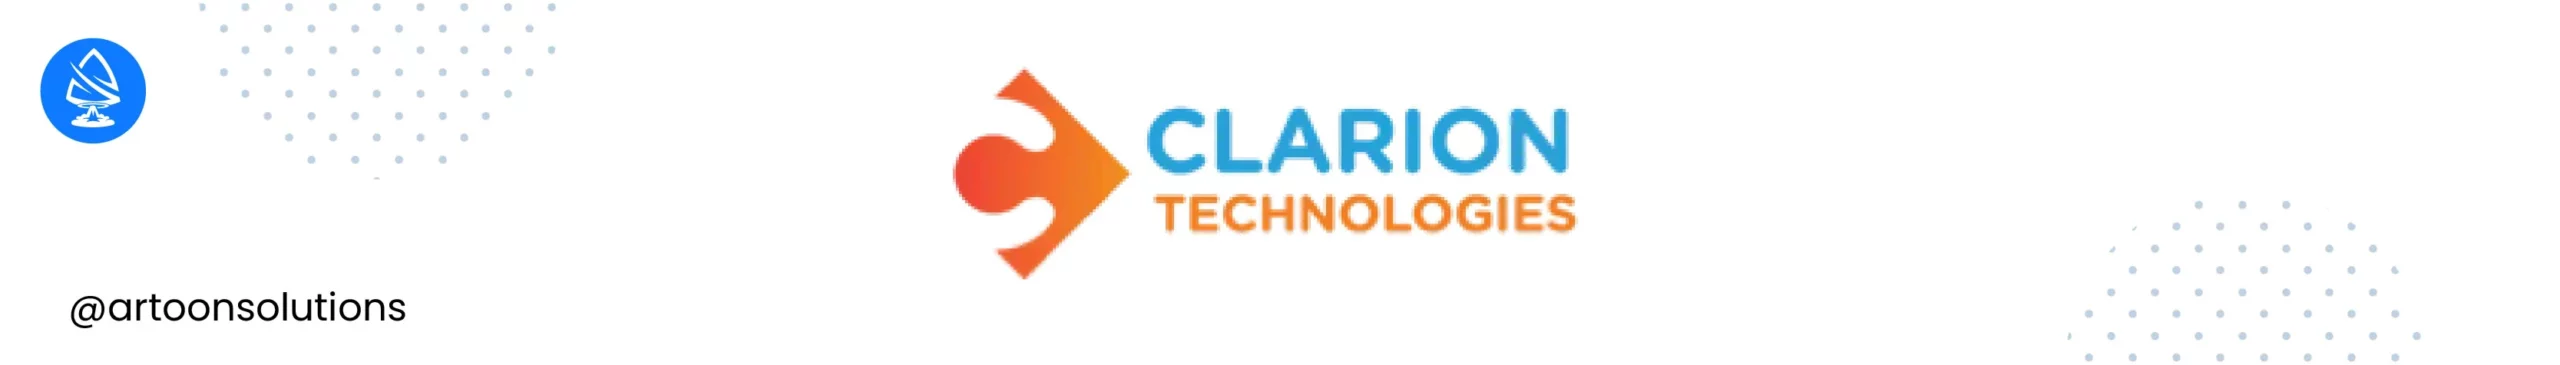 Clarion Technologies - React js development companies